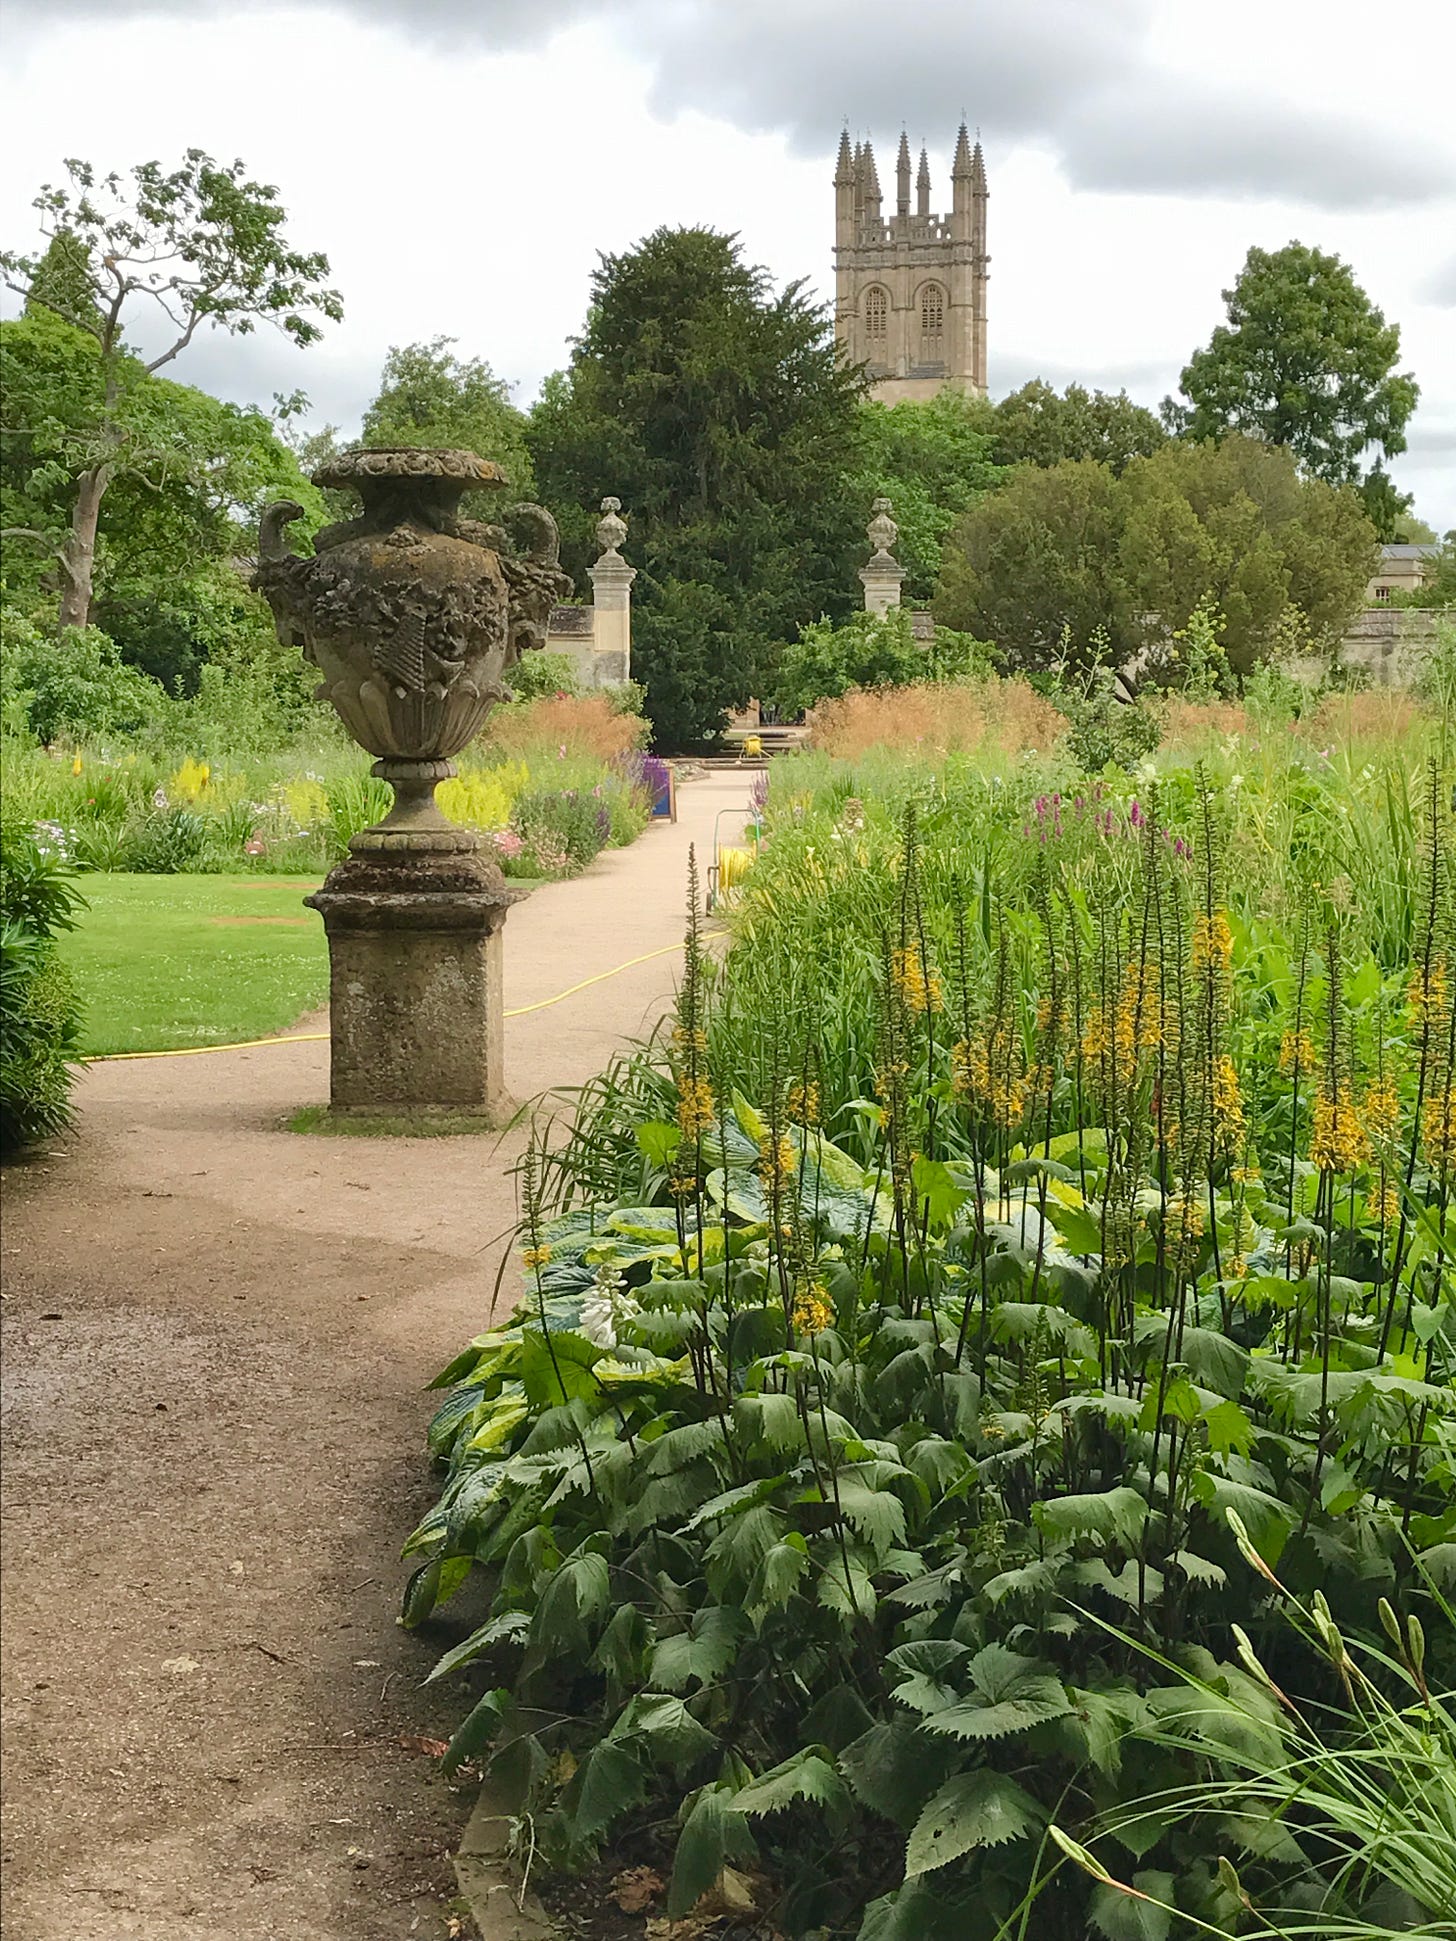 Oxford’s Magdalen Tower as scene from the garden walk at Oxford Botanic Garden.